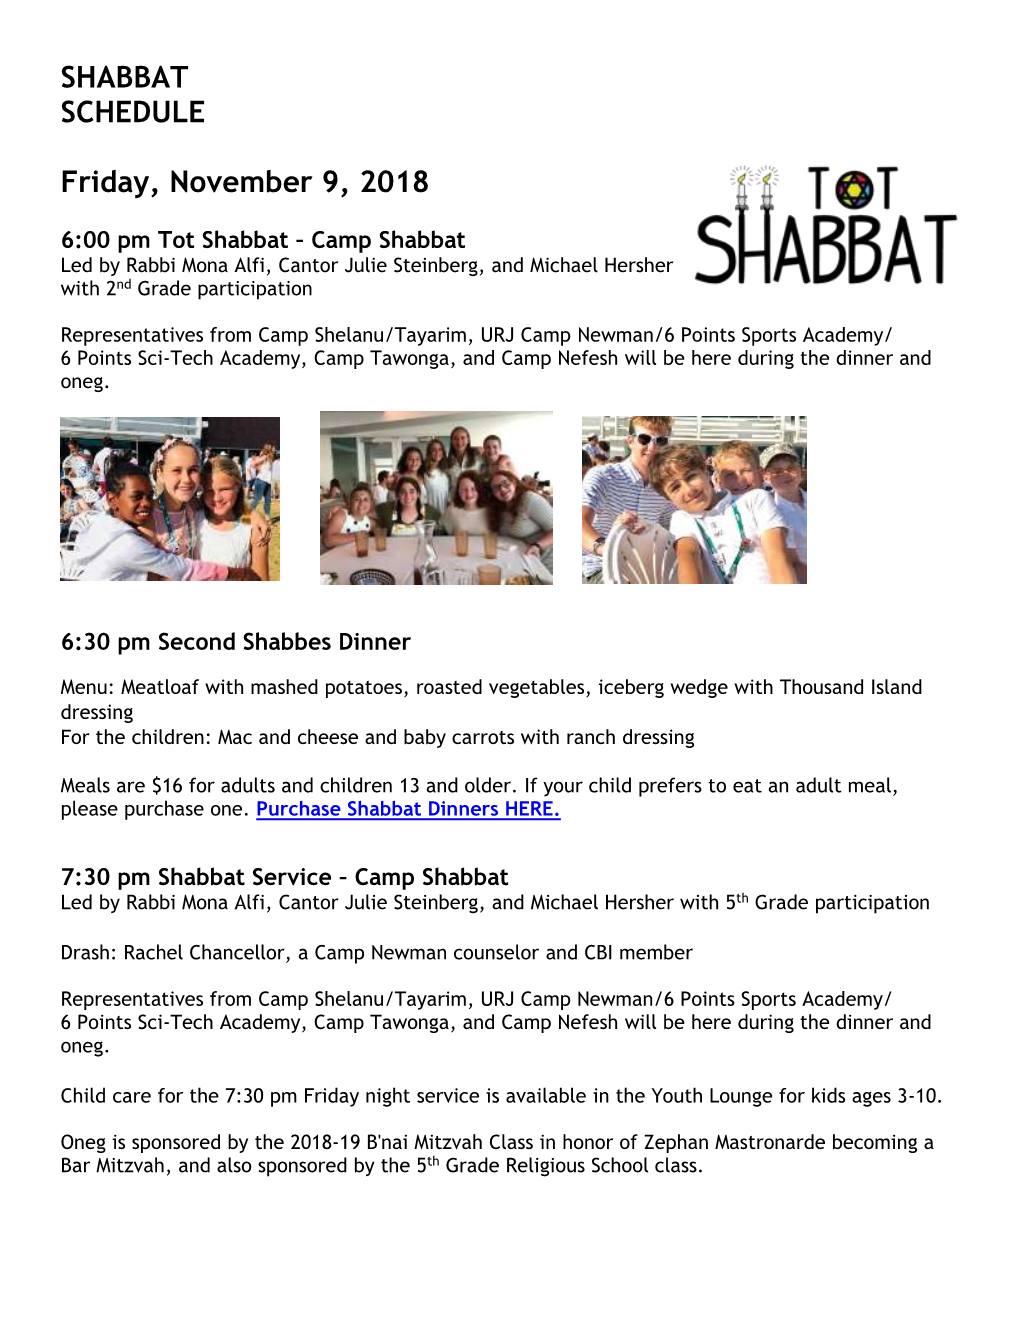 SHABBAT SCHEDULE Friday, November 9, 2018